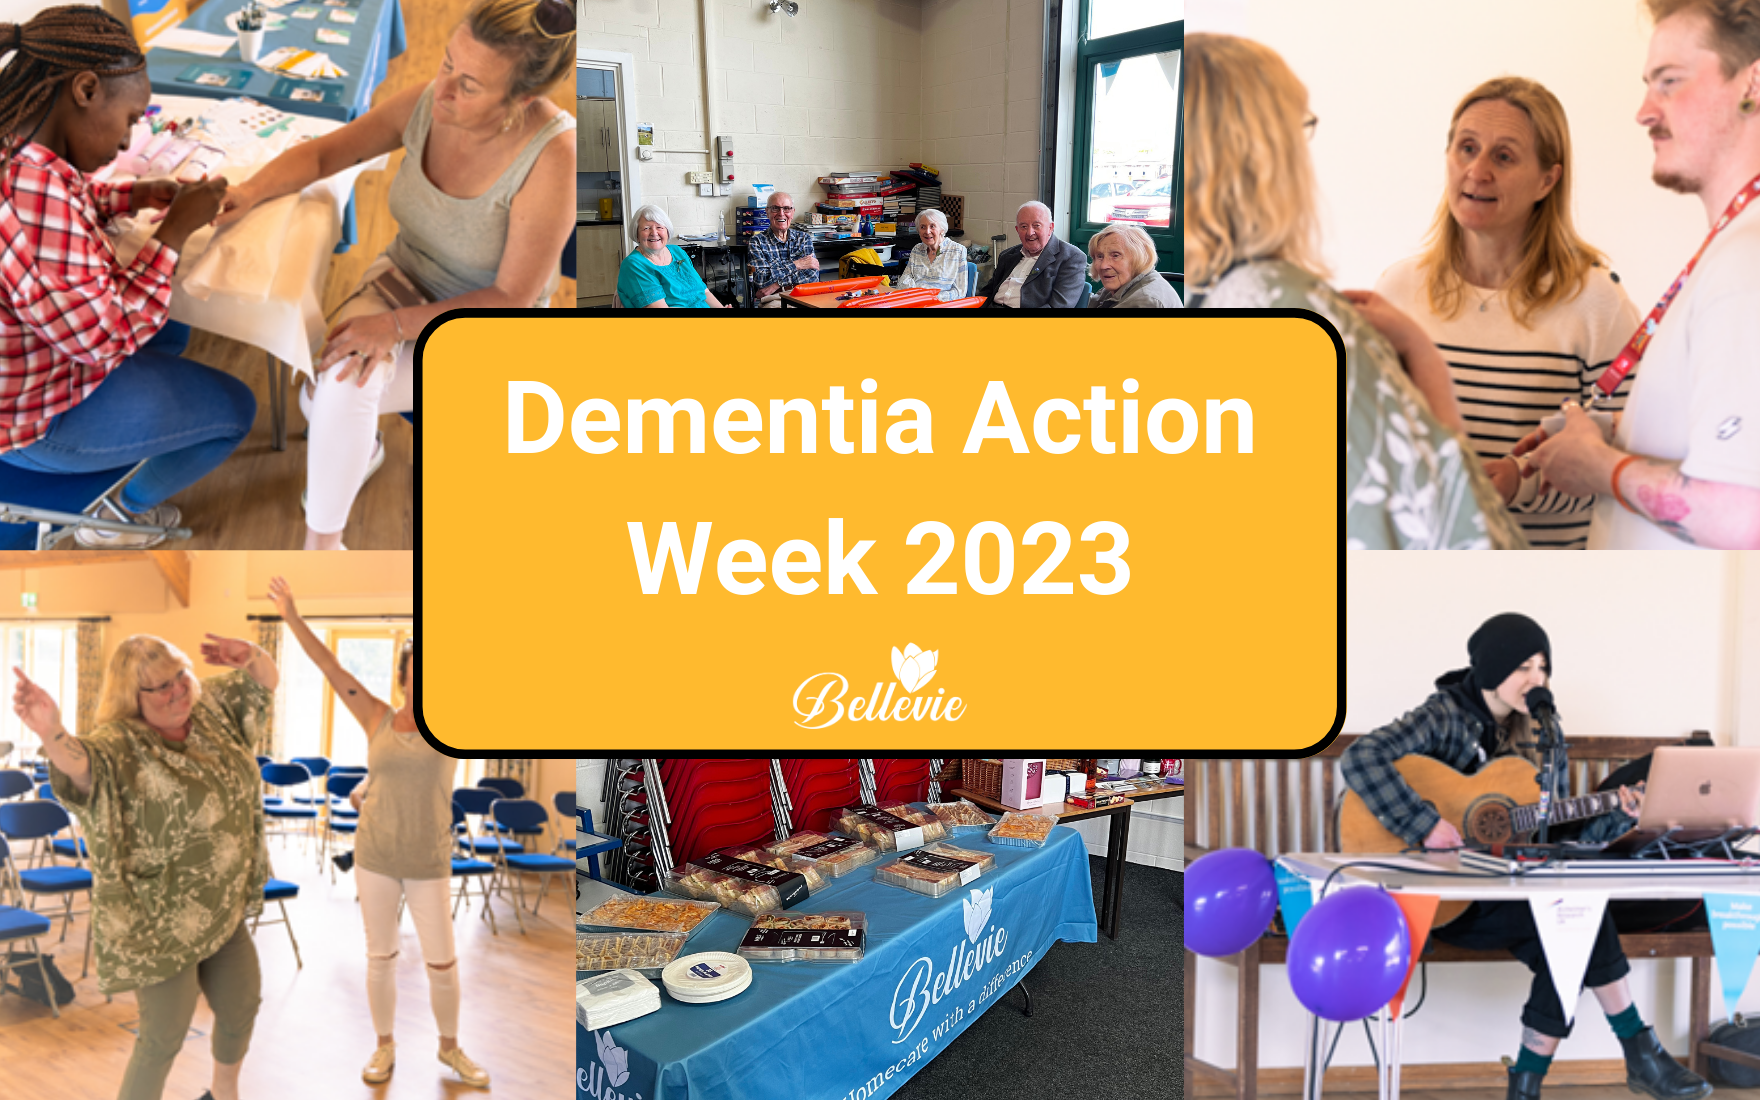 BelleVie raises over £500 for Dementia Action Week